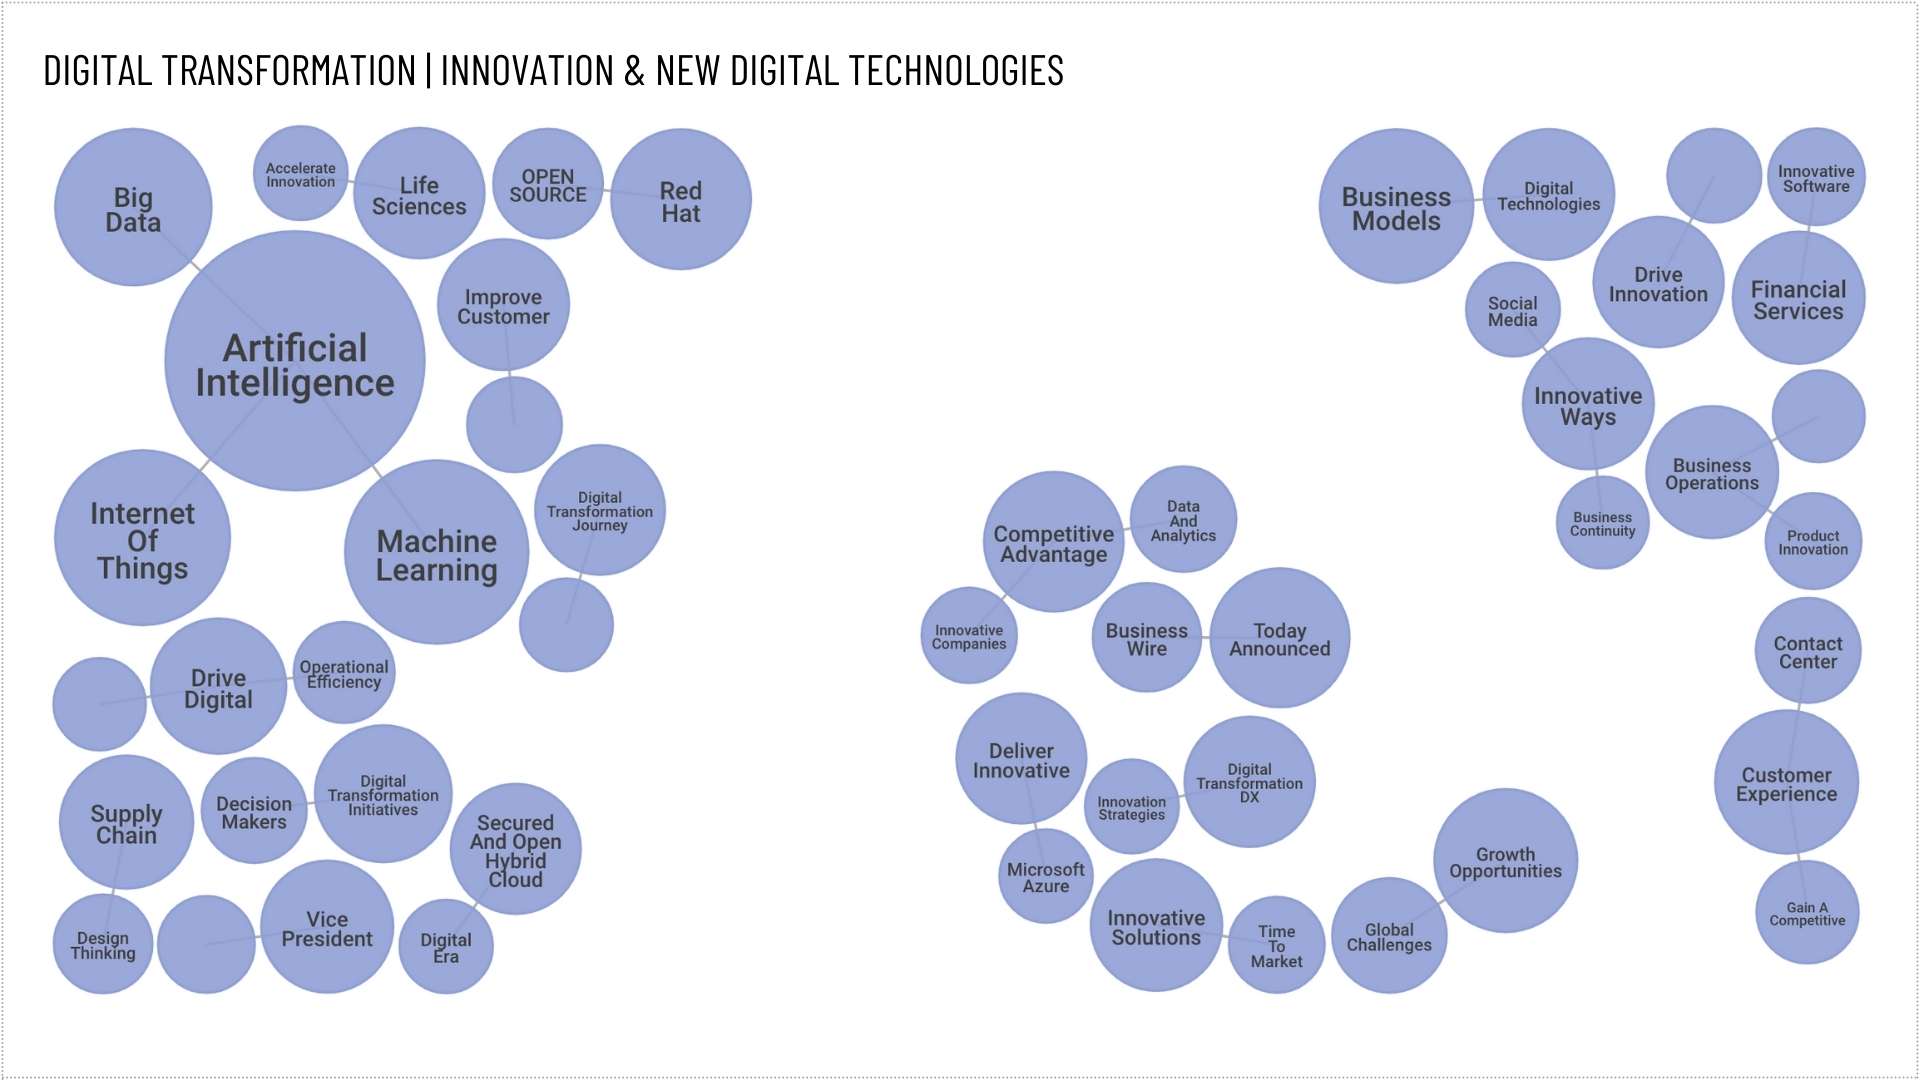 Innovation Analysis of Digital Transformation Topics